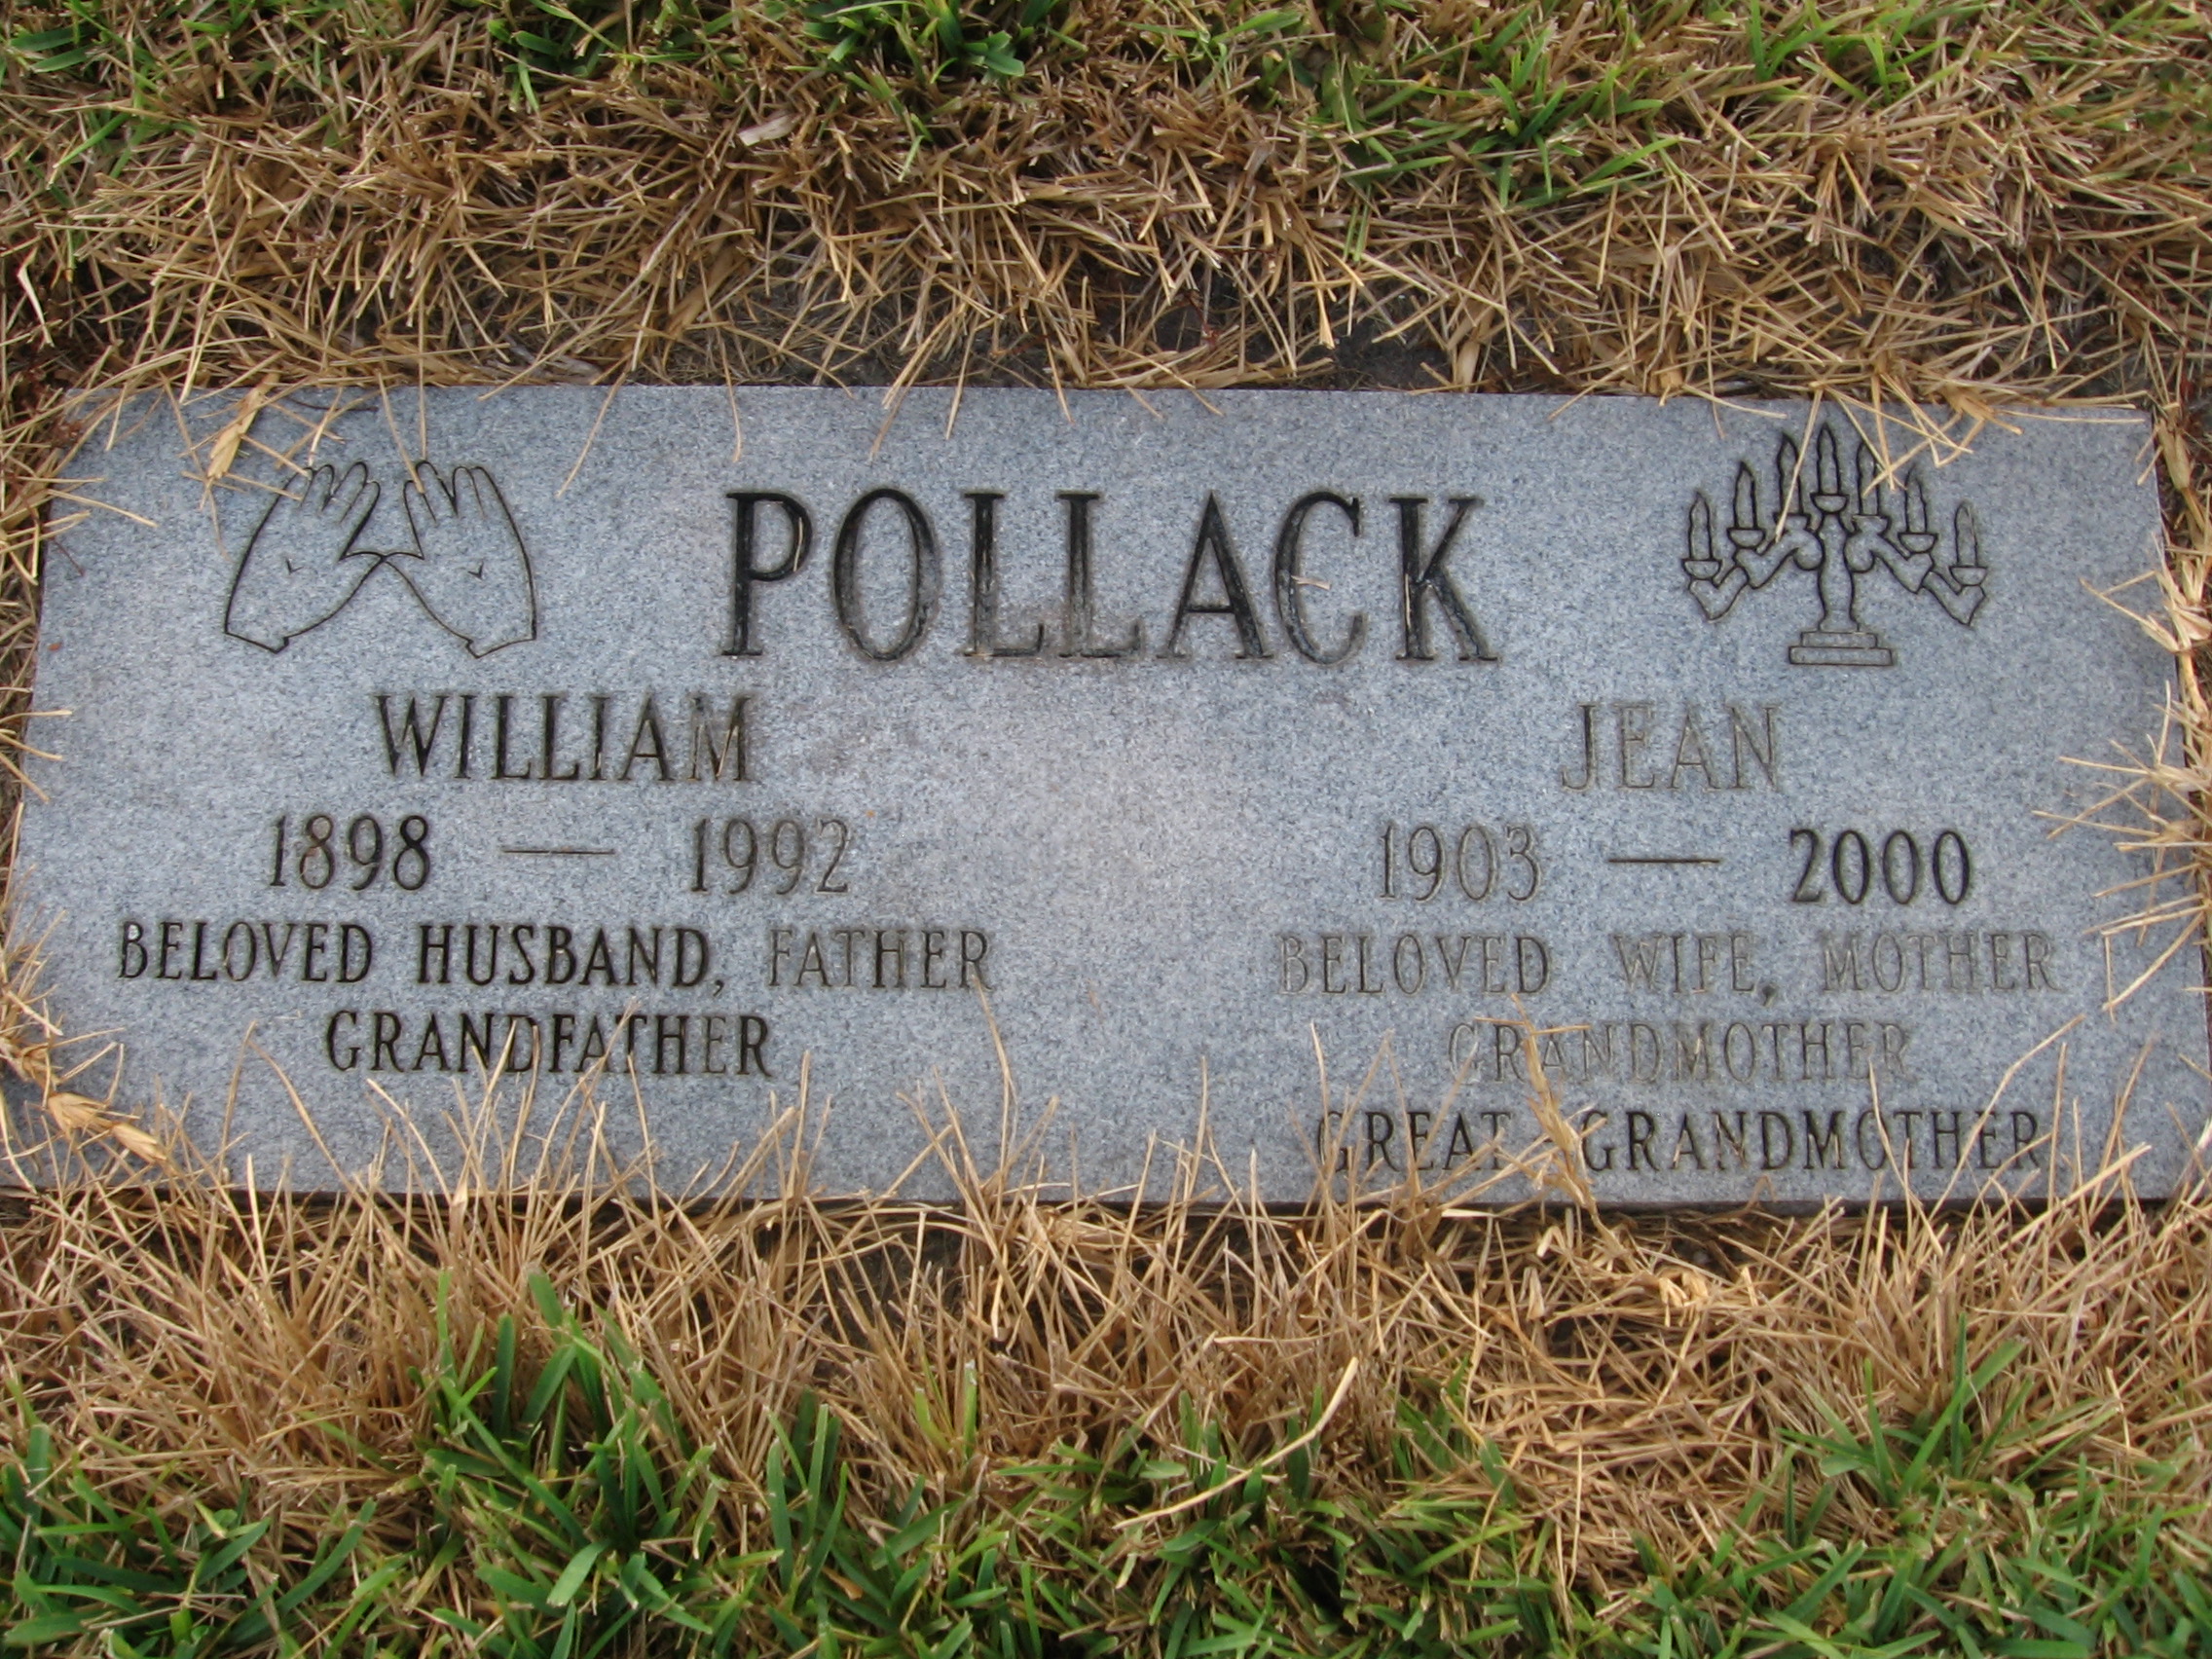 Jean Pollack